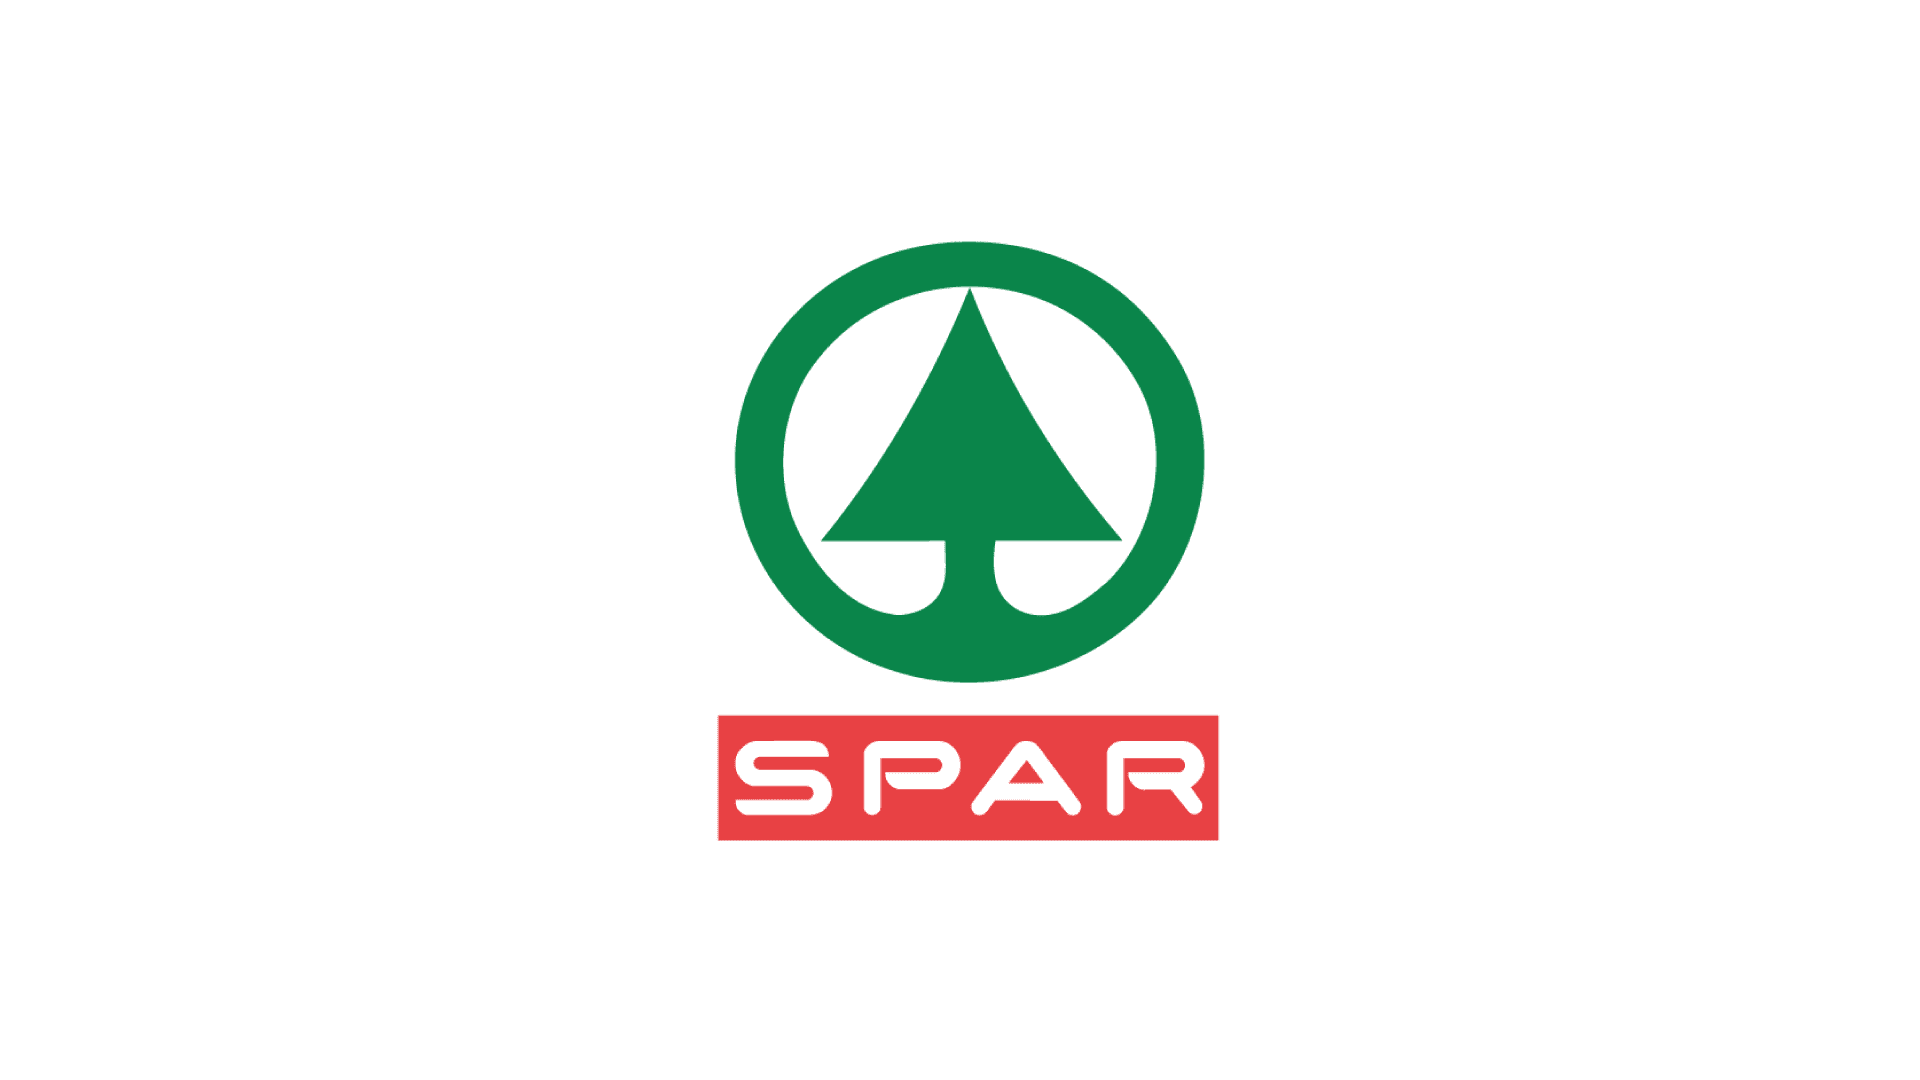 Spar works with CADS